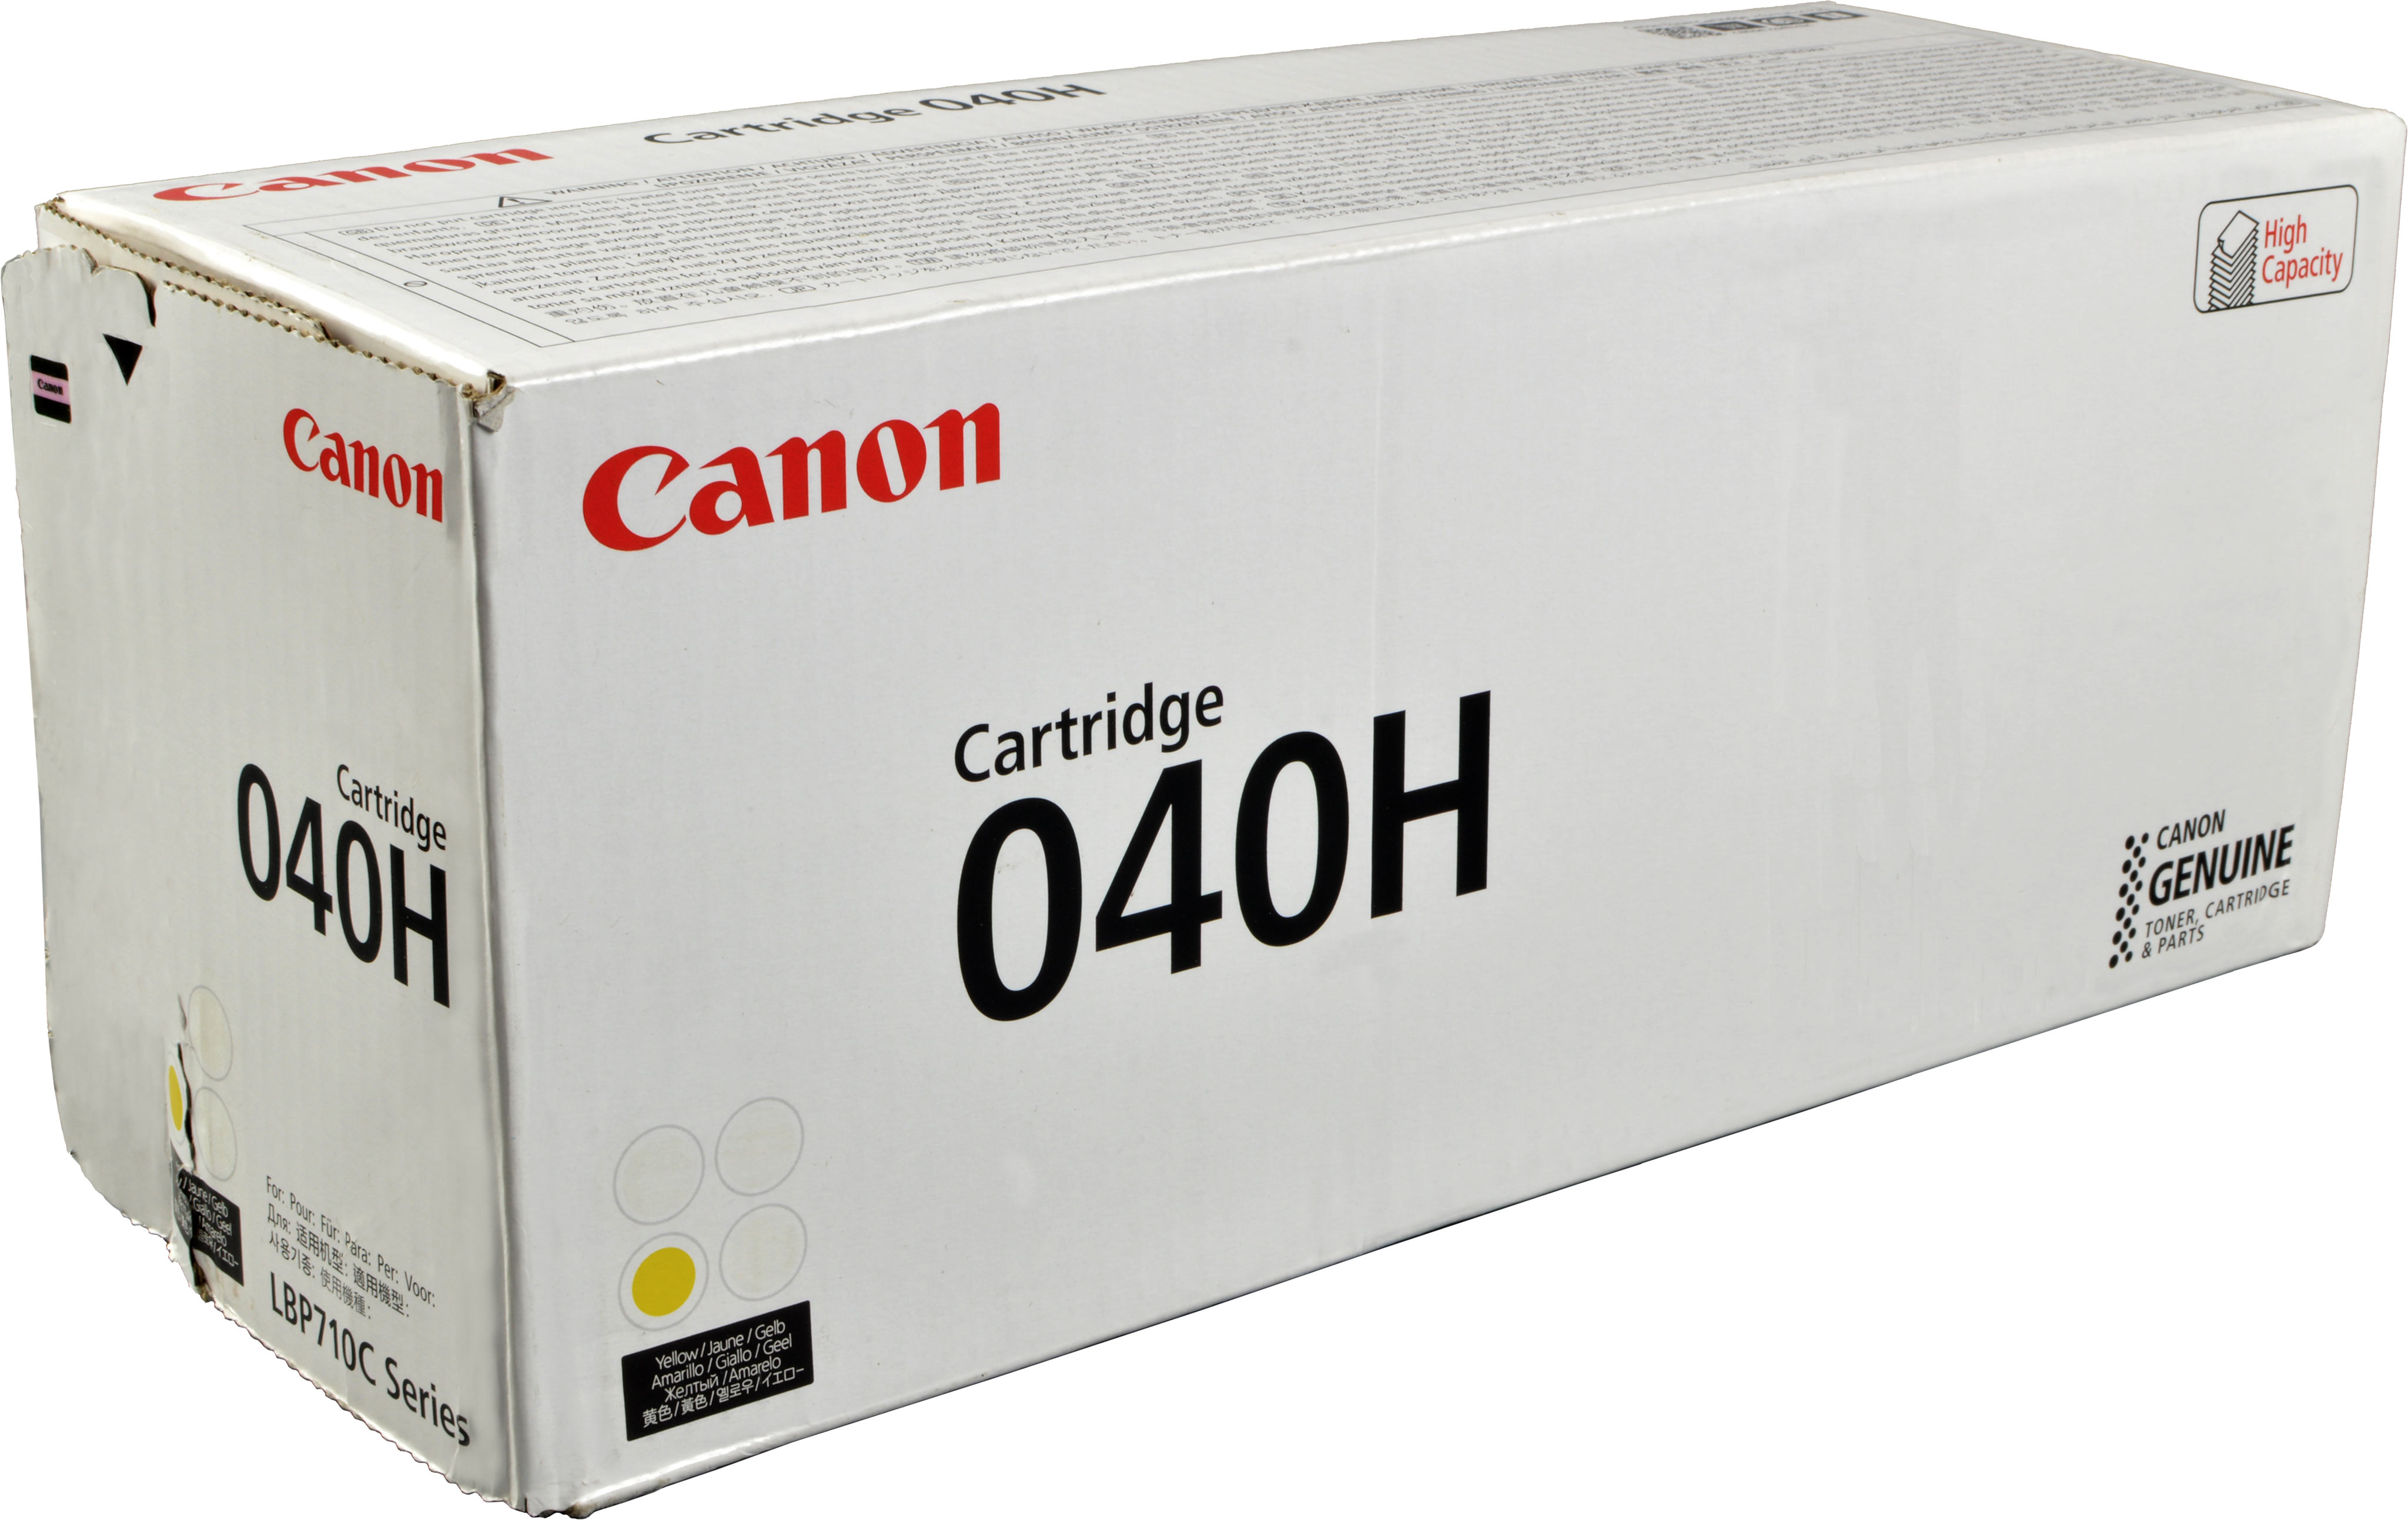 Canon Toner 0455C001  040H  yellow